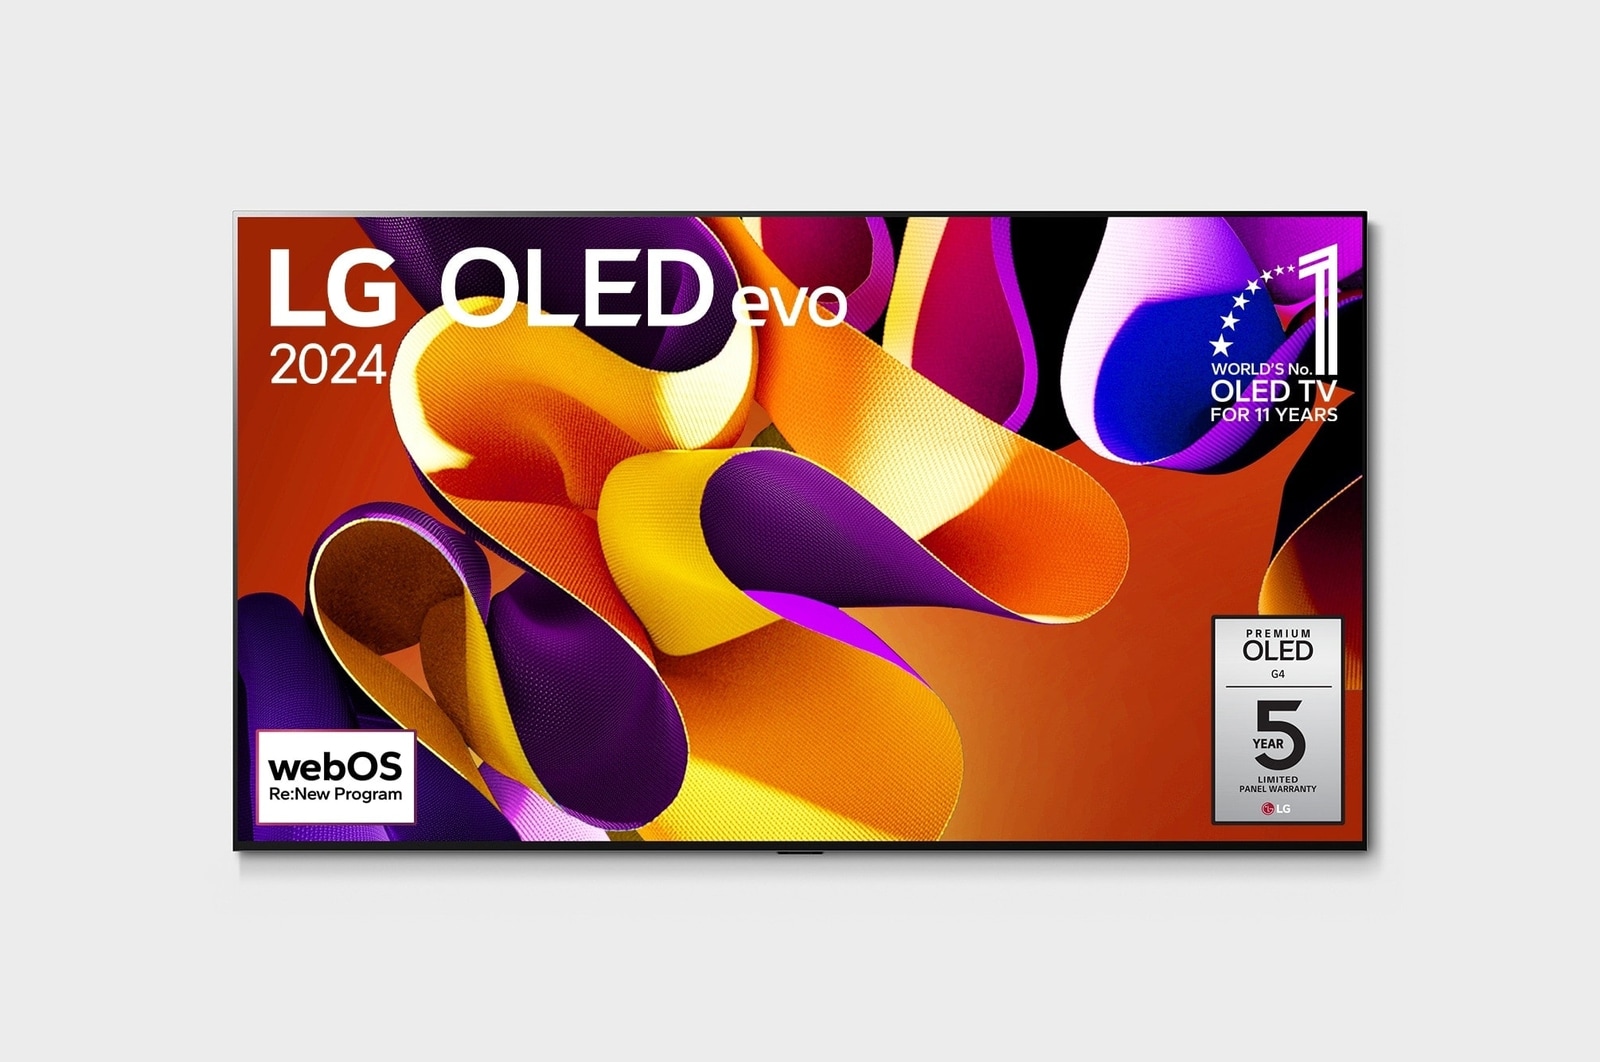 LG OLED evo G4 TV, OLED97G4WUA, with 11 Years of world number 1 OLED Emblem and 5-Year Panel Warranty logo on screen